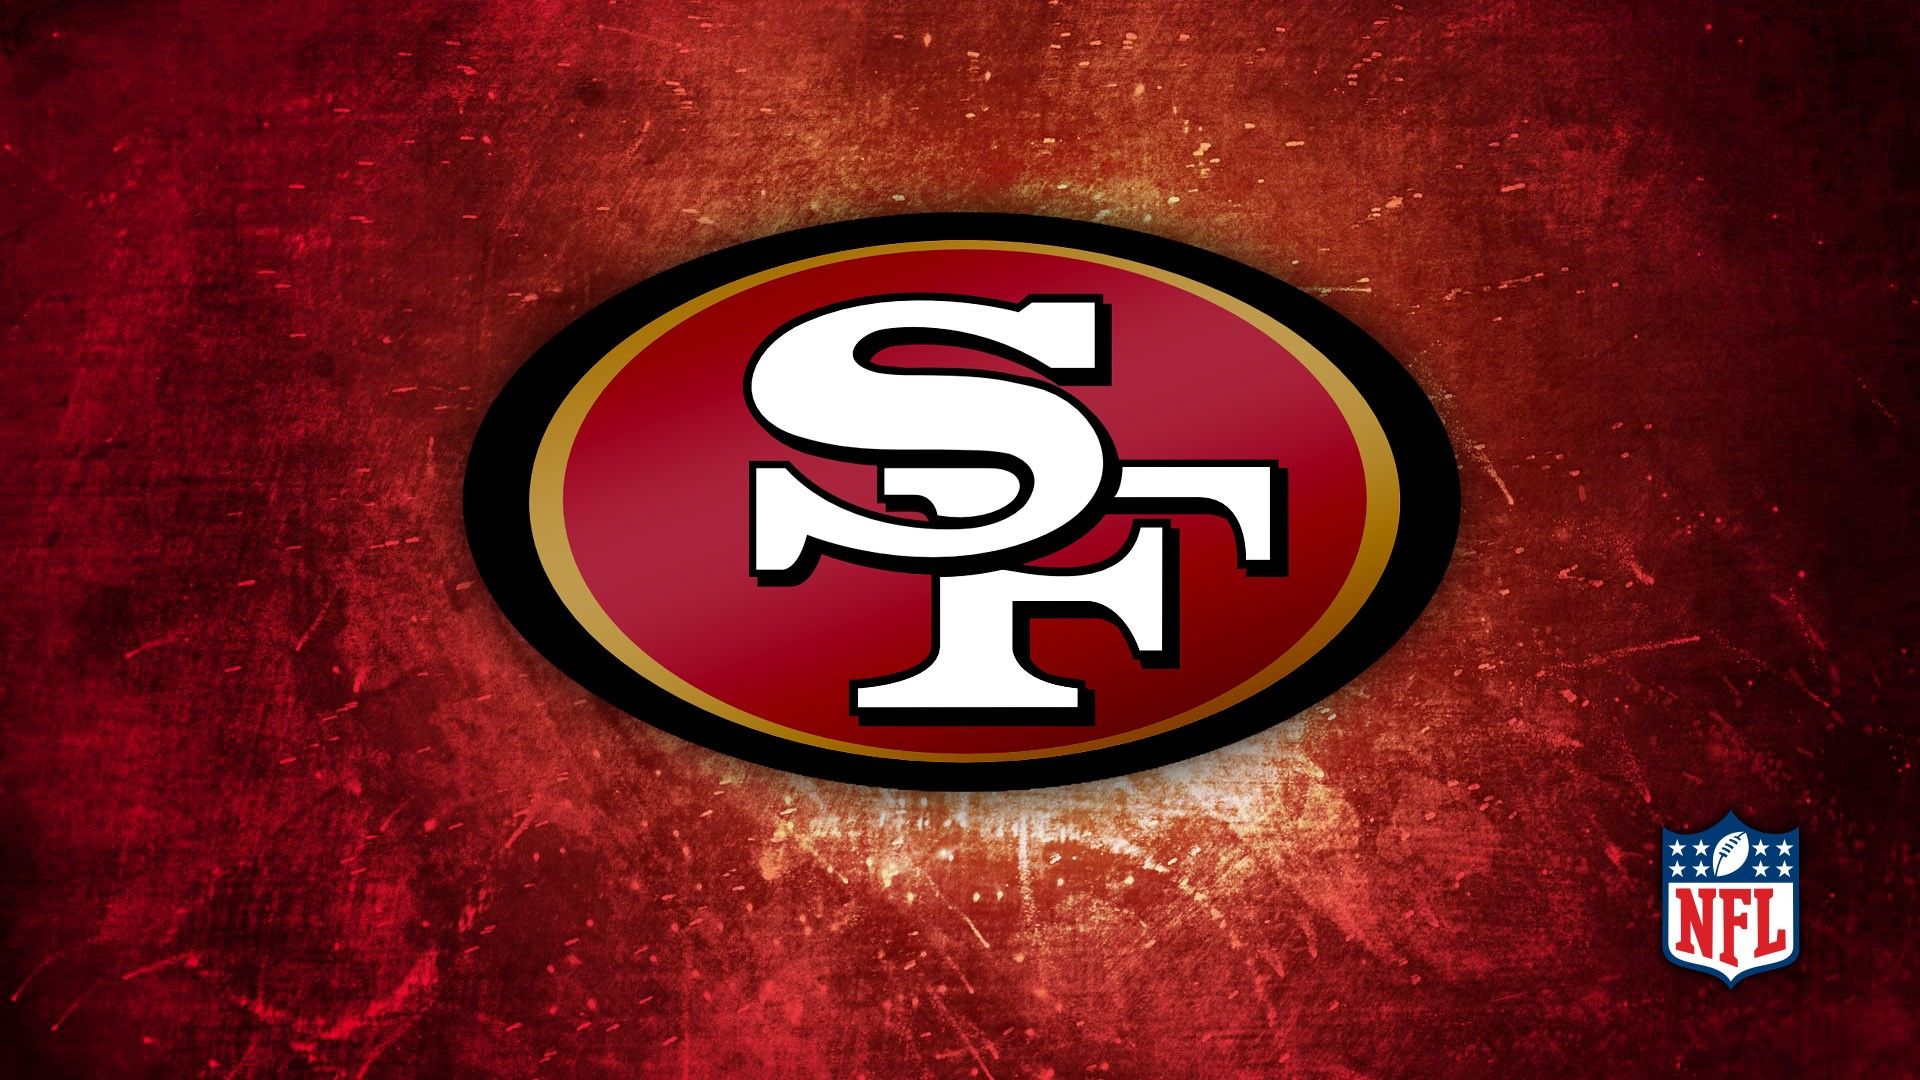 HD Background San Francisco 49ers NFL Football Wallpaper. San francisco 49ers logo, Nfl teams logos, Nfl football wallpaper